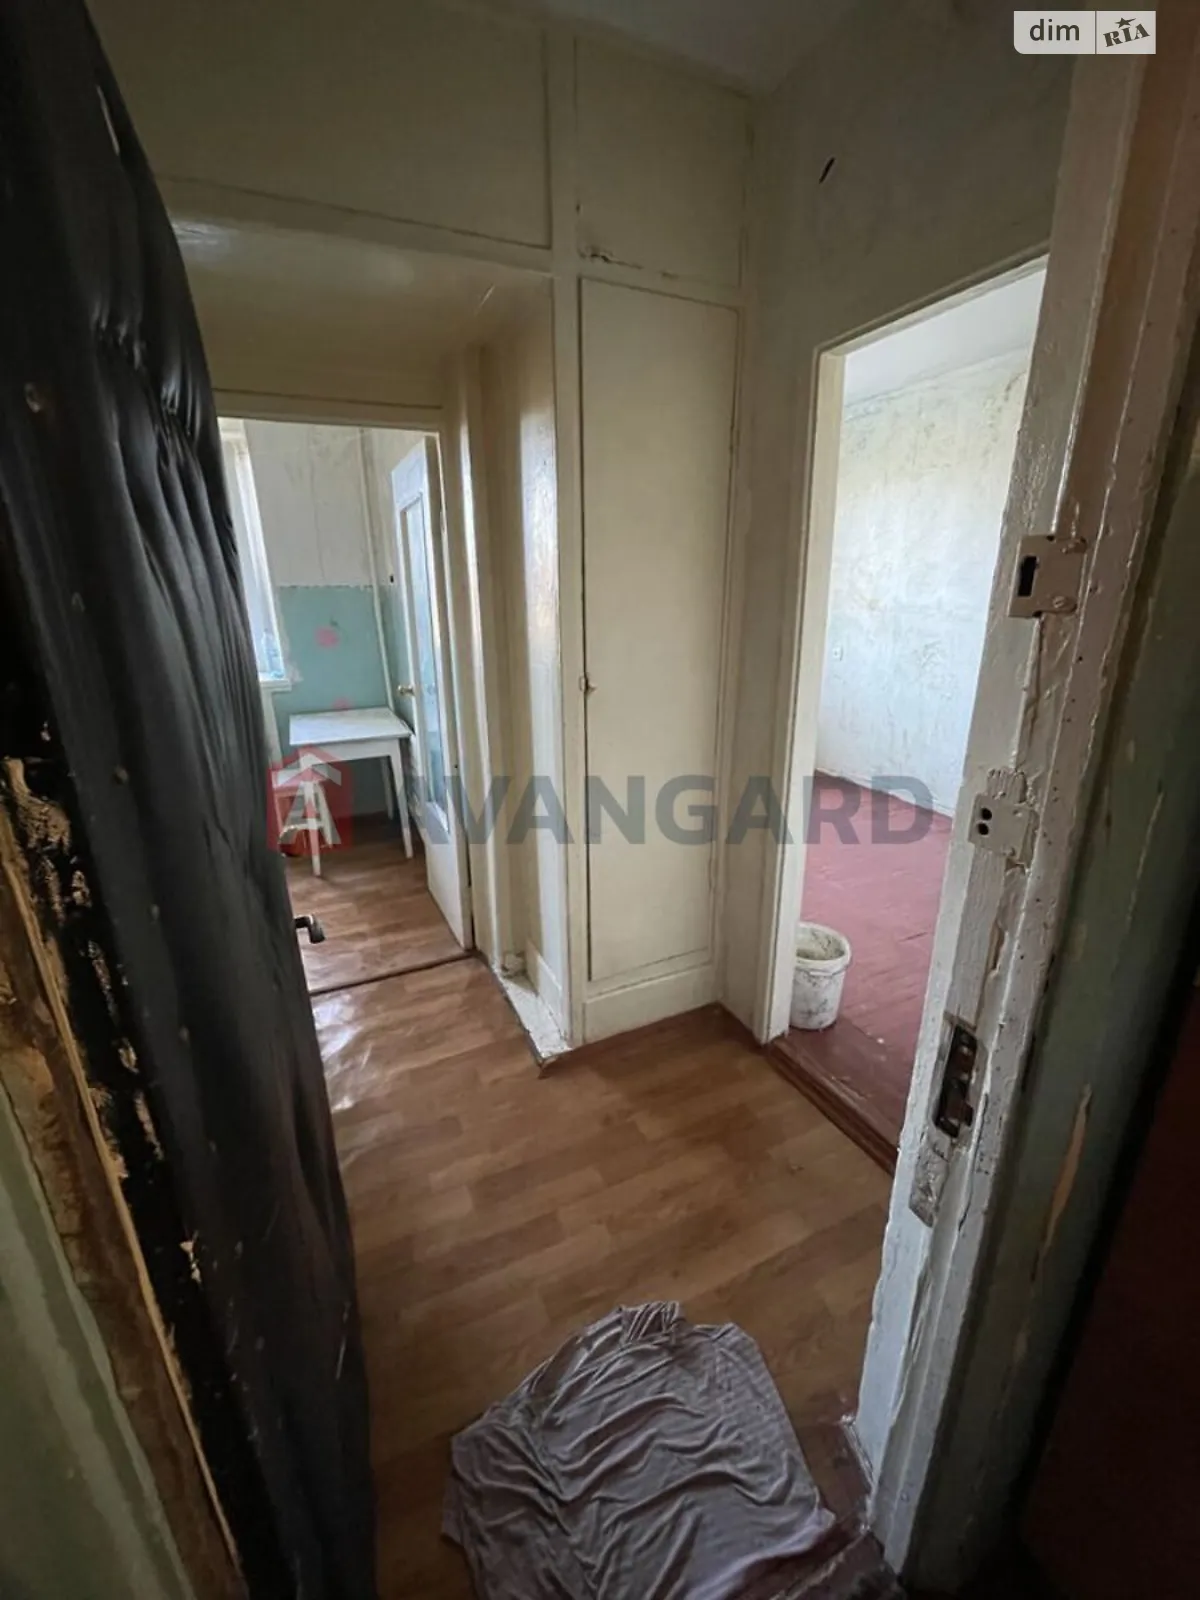 Продается комната 20 кв. м в Запорожье, цена: 11000 $ - фото 1